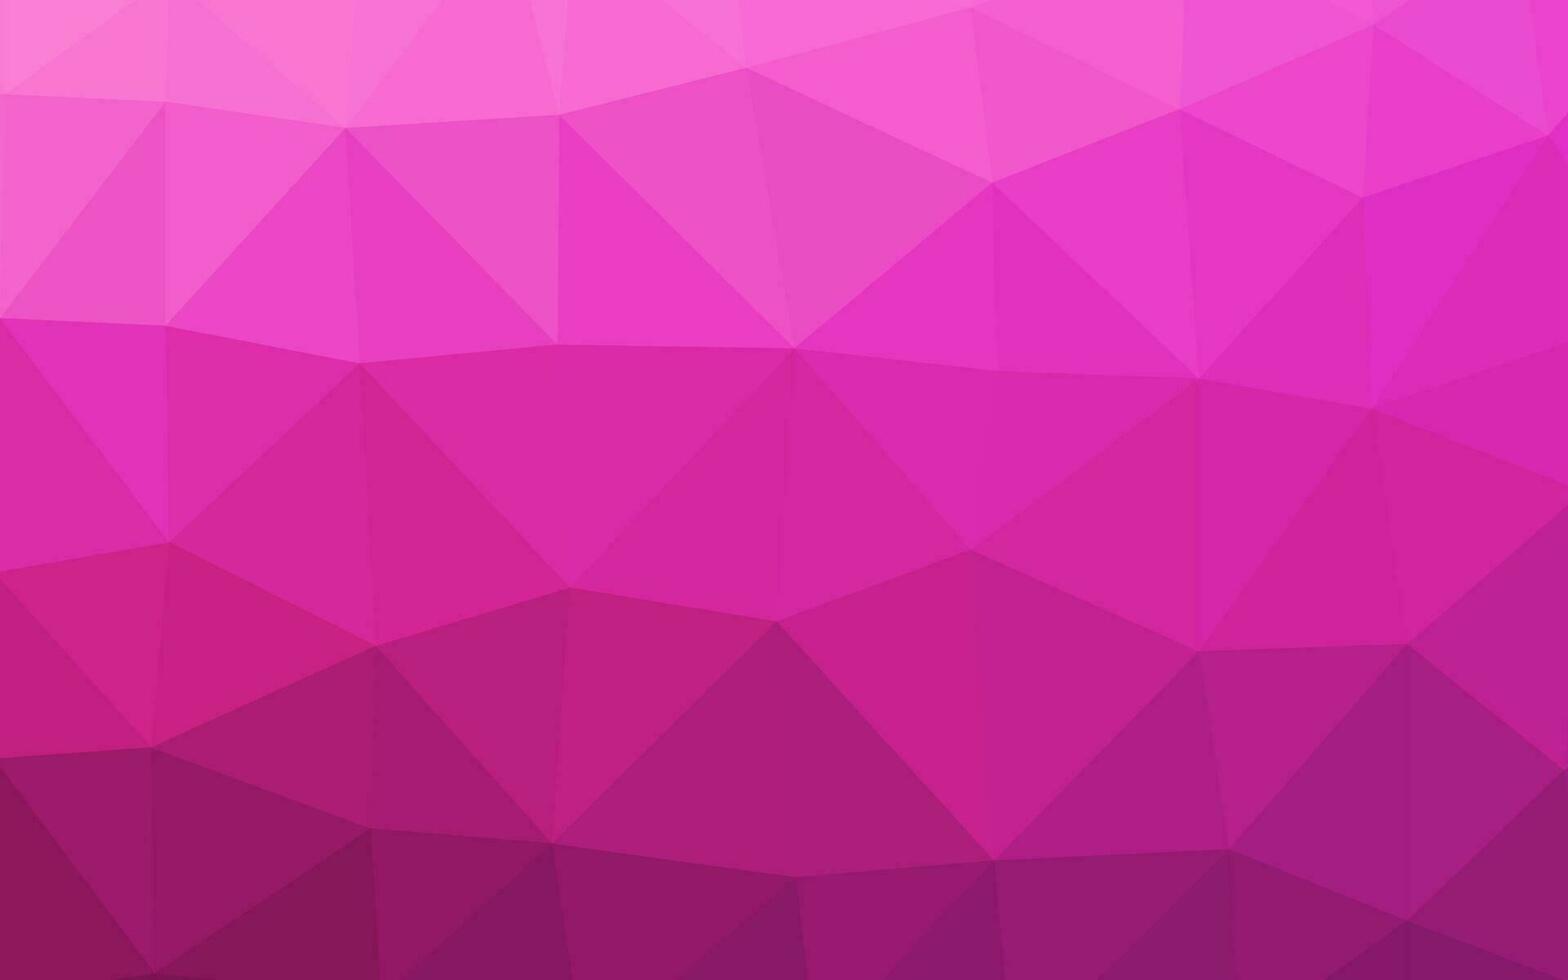 textura poligonal do sumário do vetor rosa claro.